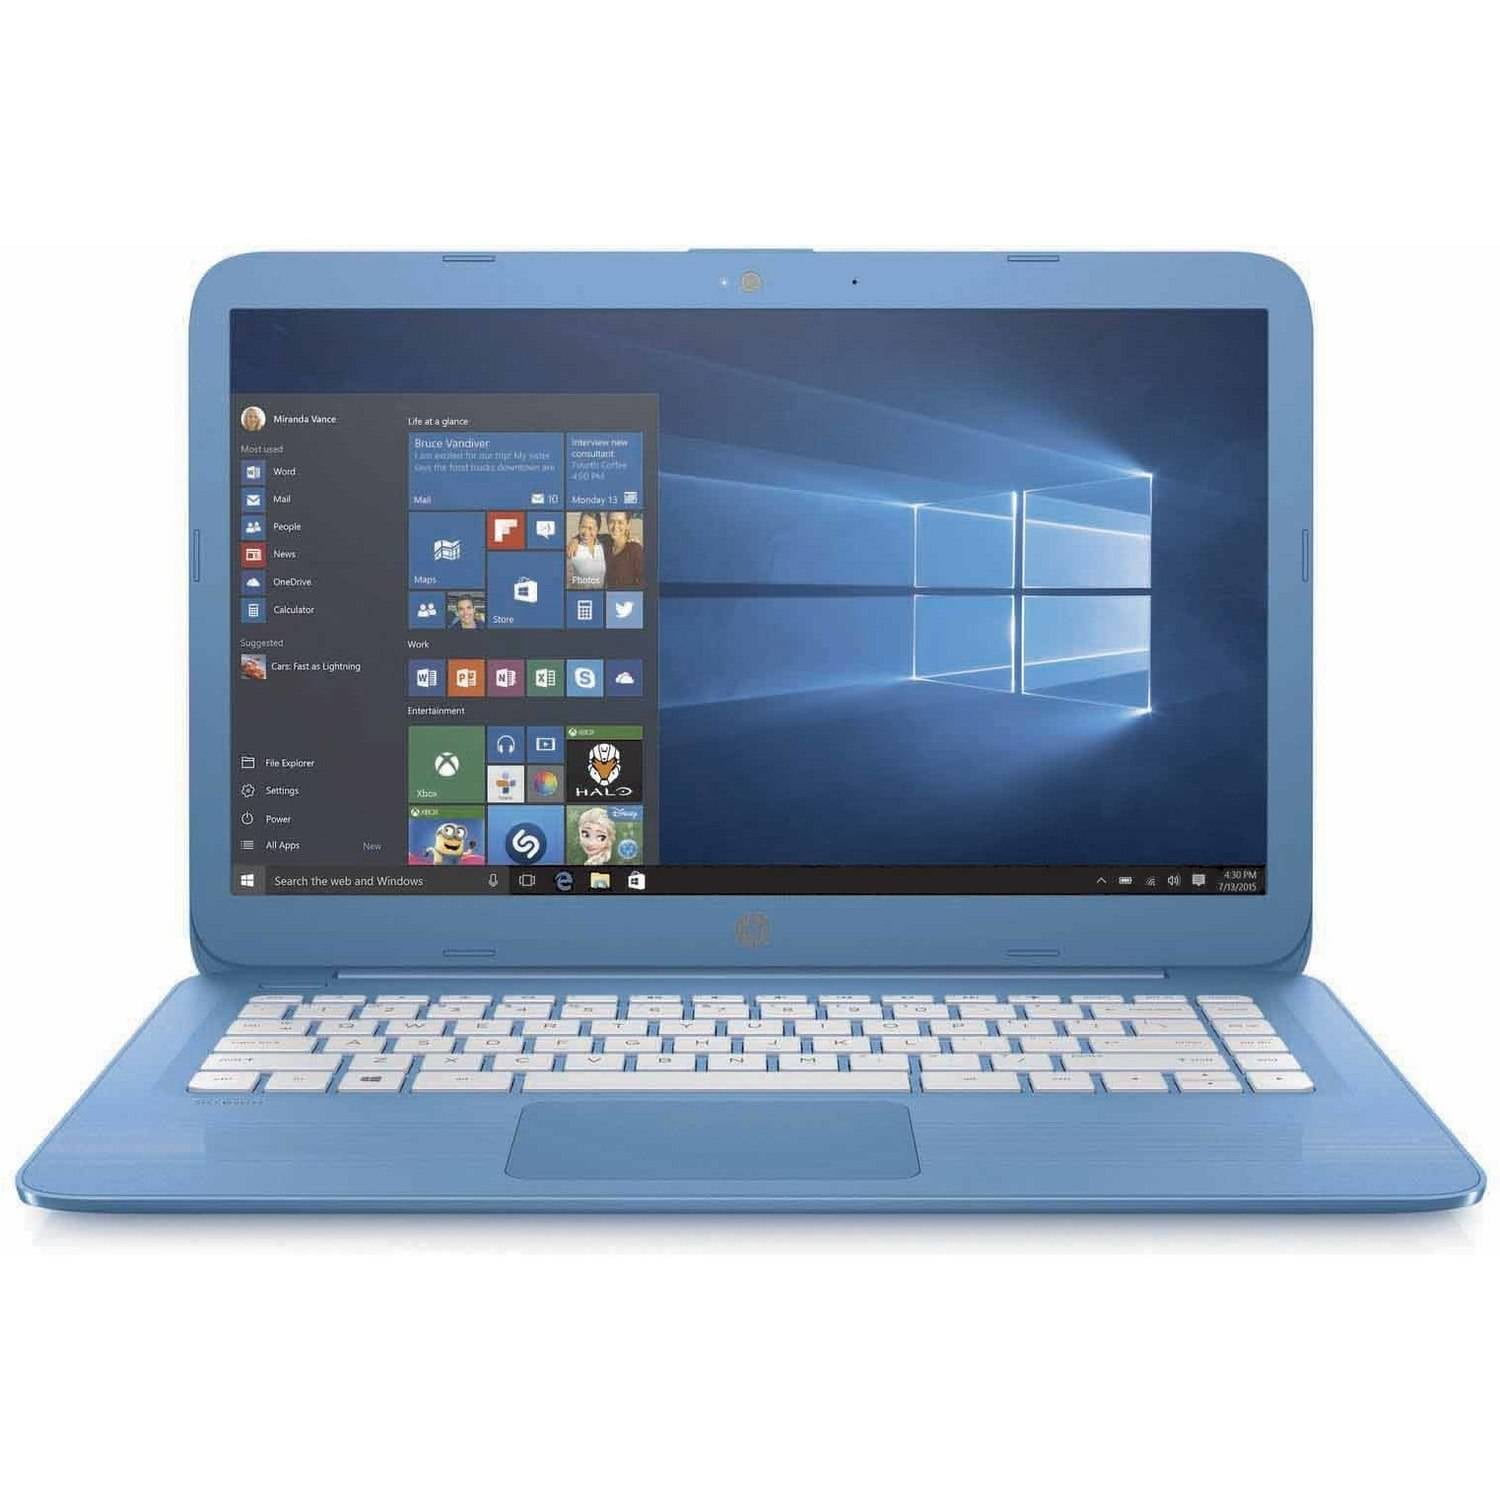 Alert delicacy Bend HP Stream 14" Laptop, Windows 10 Home, Office 365 Personal 1-year included,  Intel Celeron N3060 Processor, 4GB RAM, 32GB eMMC Storage - Walmart.com